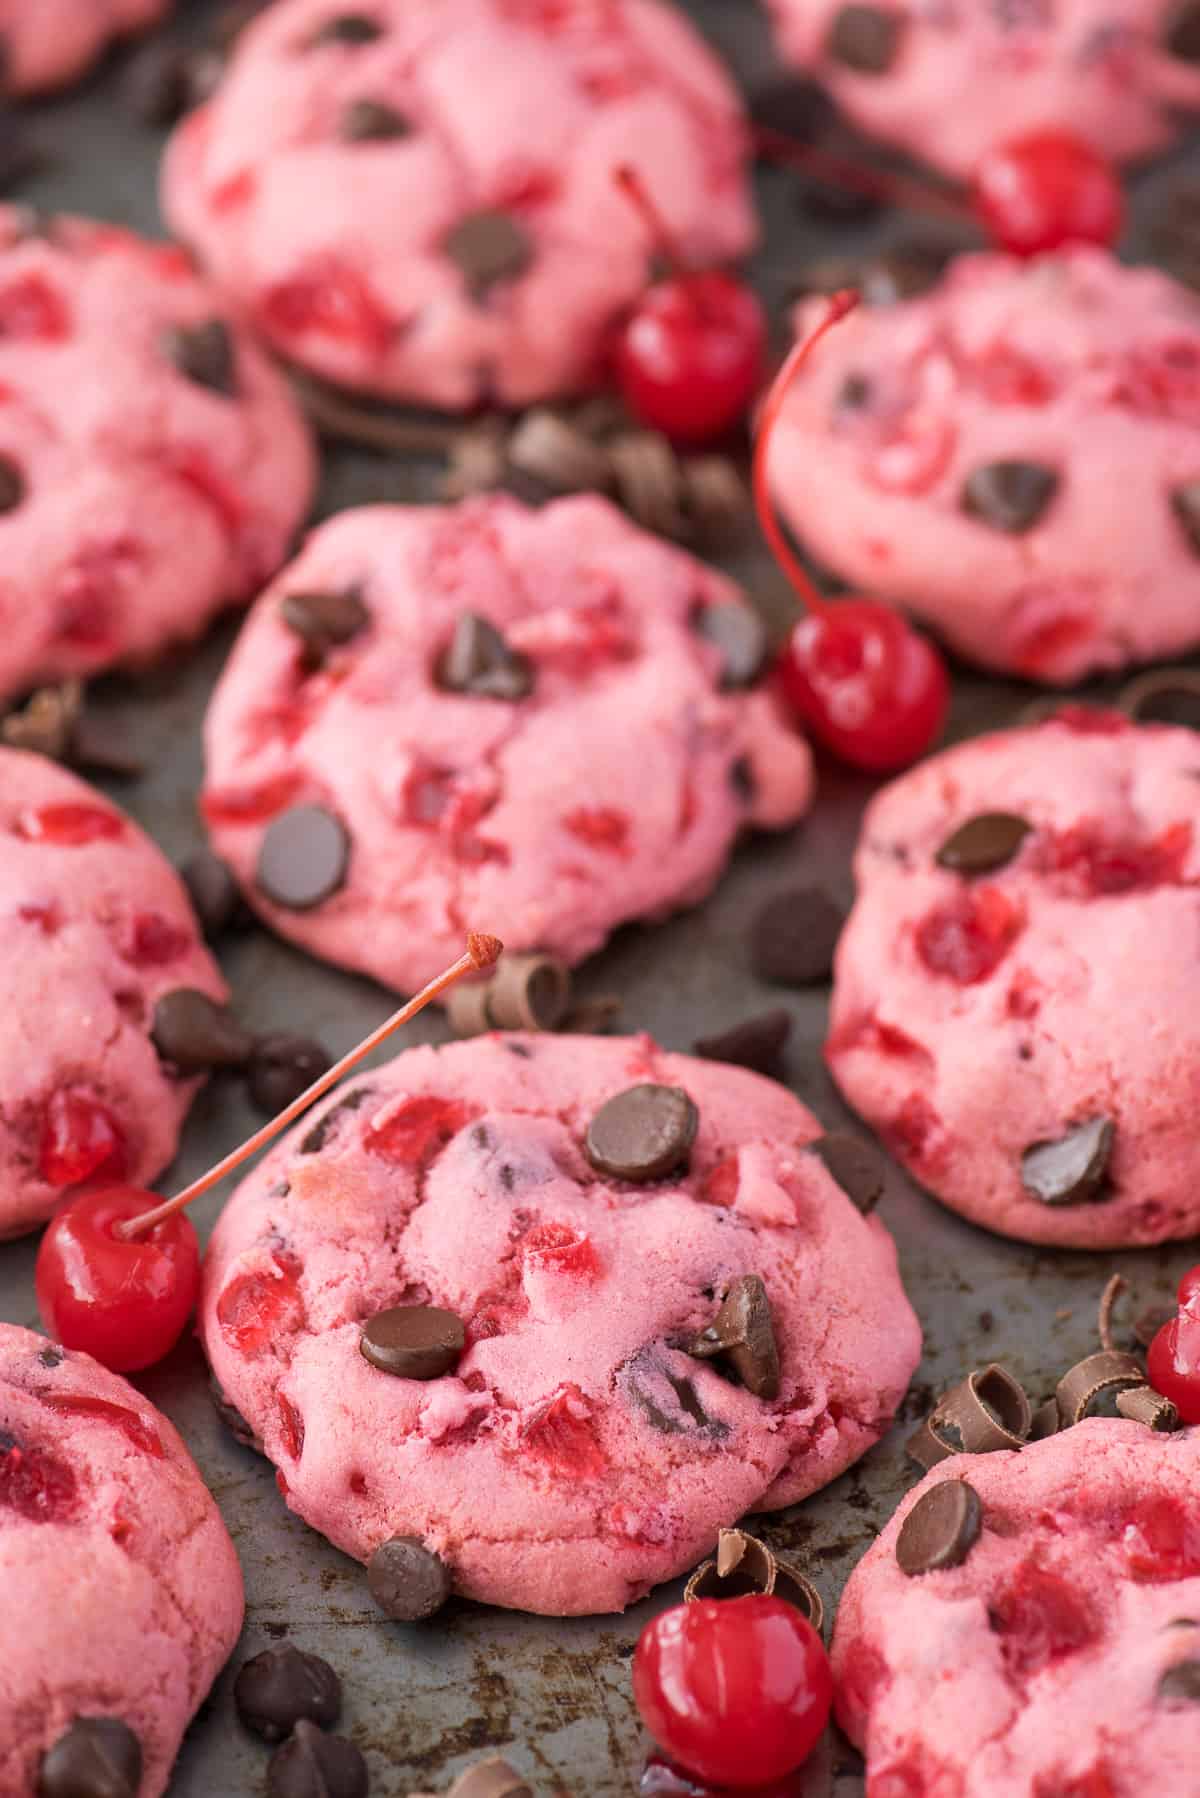 pink maraschino cherry chocolate chip cookies on baking sheet with cherries and chocolate chips